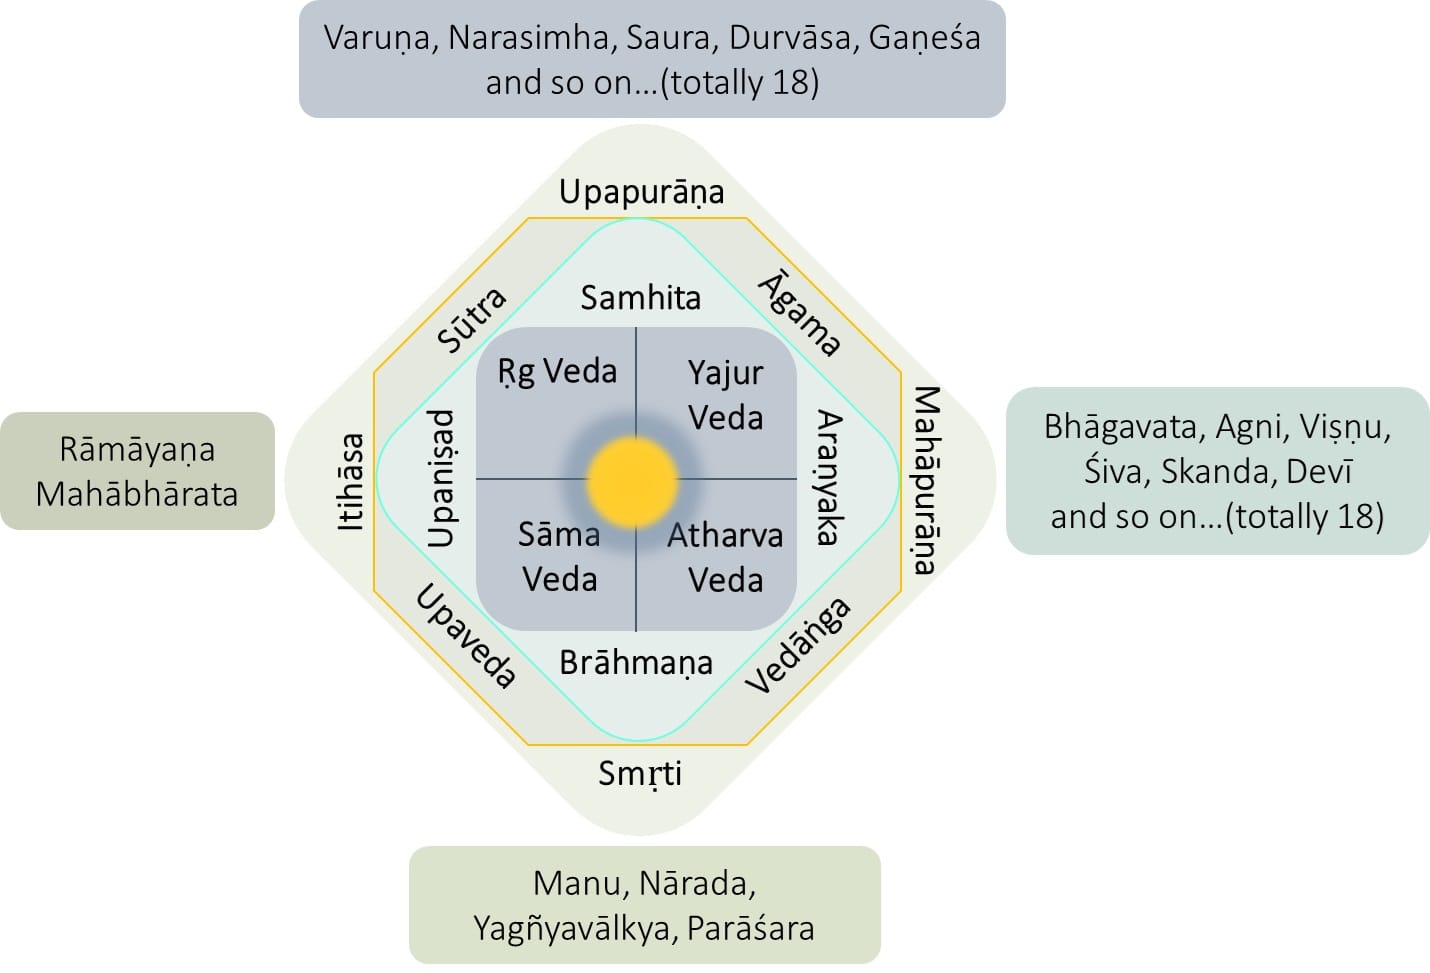 Itihāsas: How are they the same as Dharma?